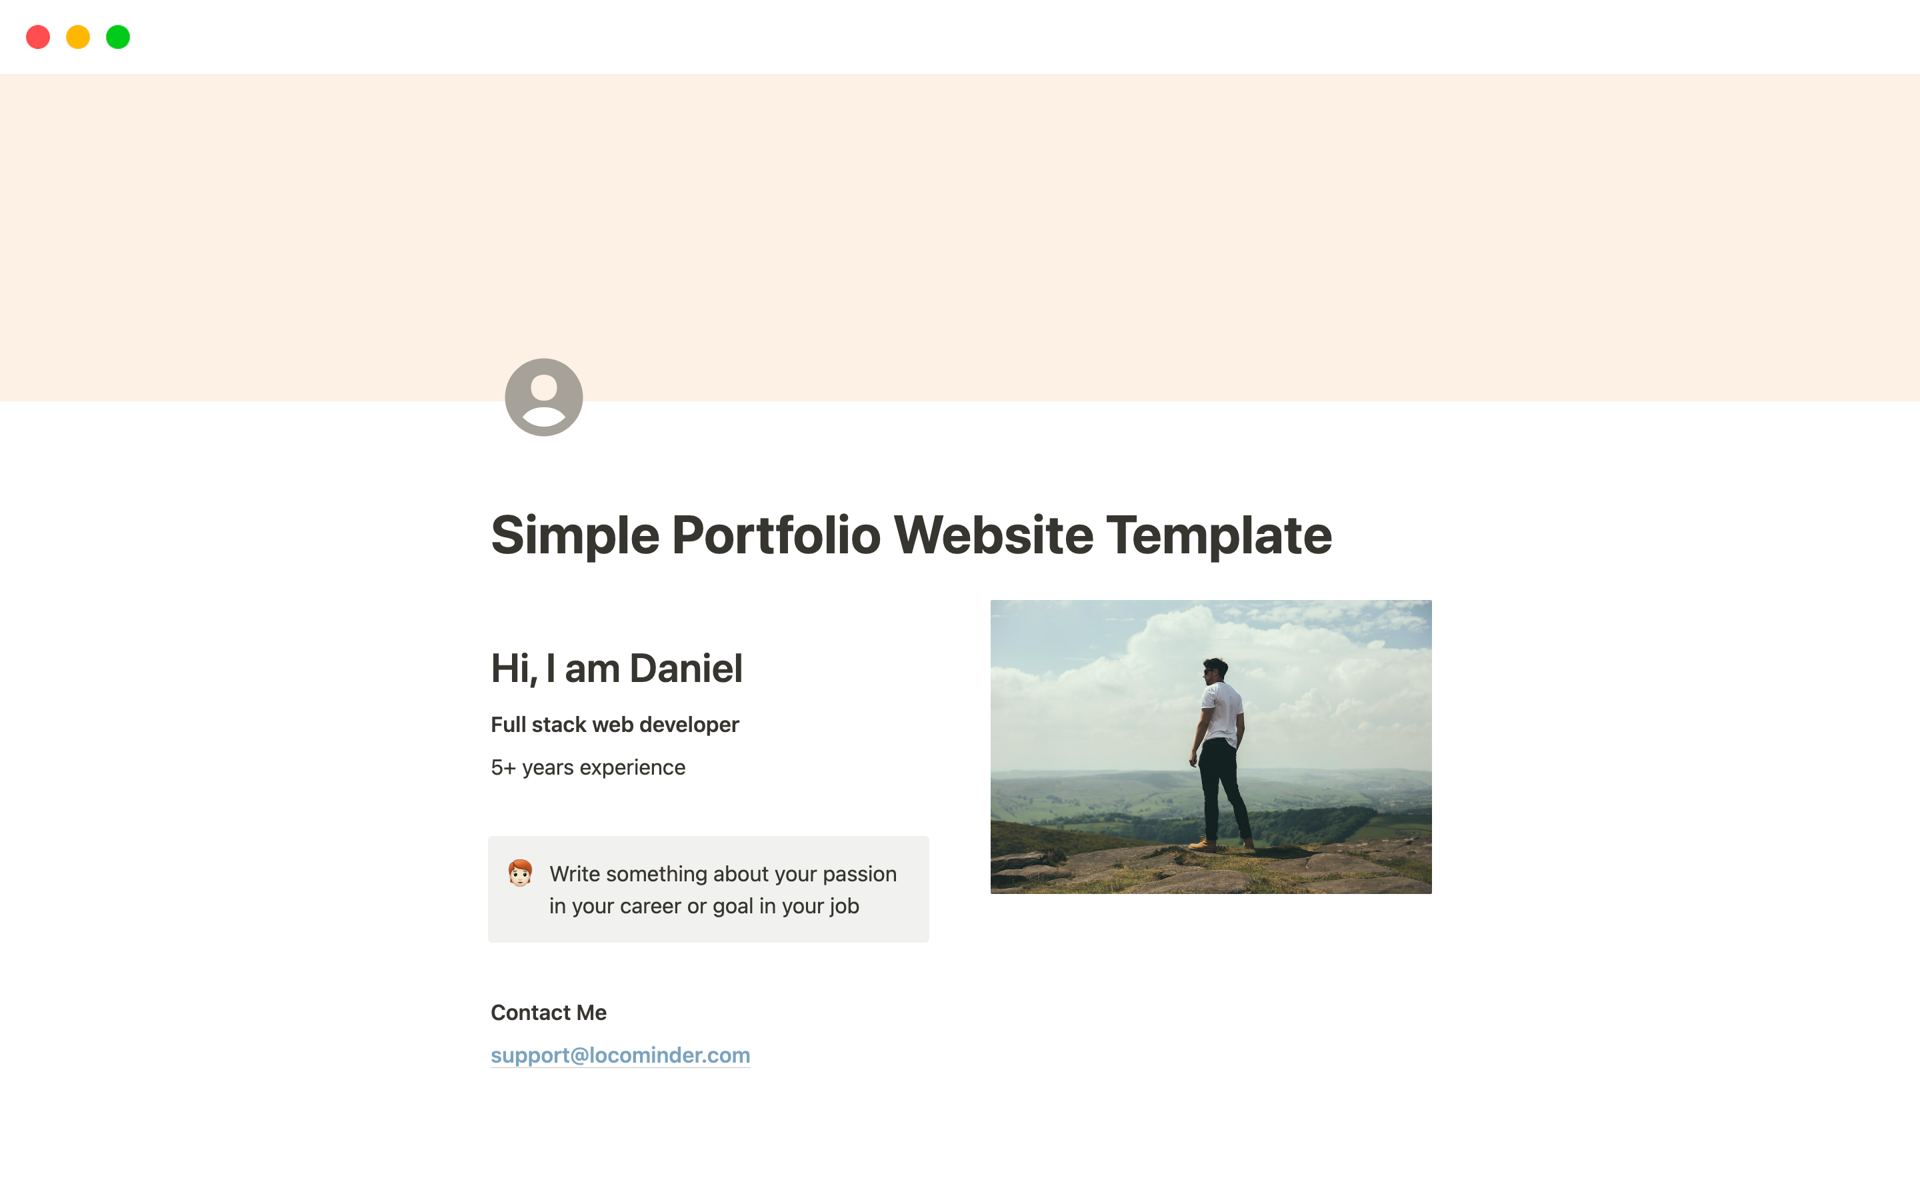 A template preview for Simple Portfolio Website